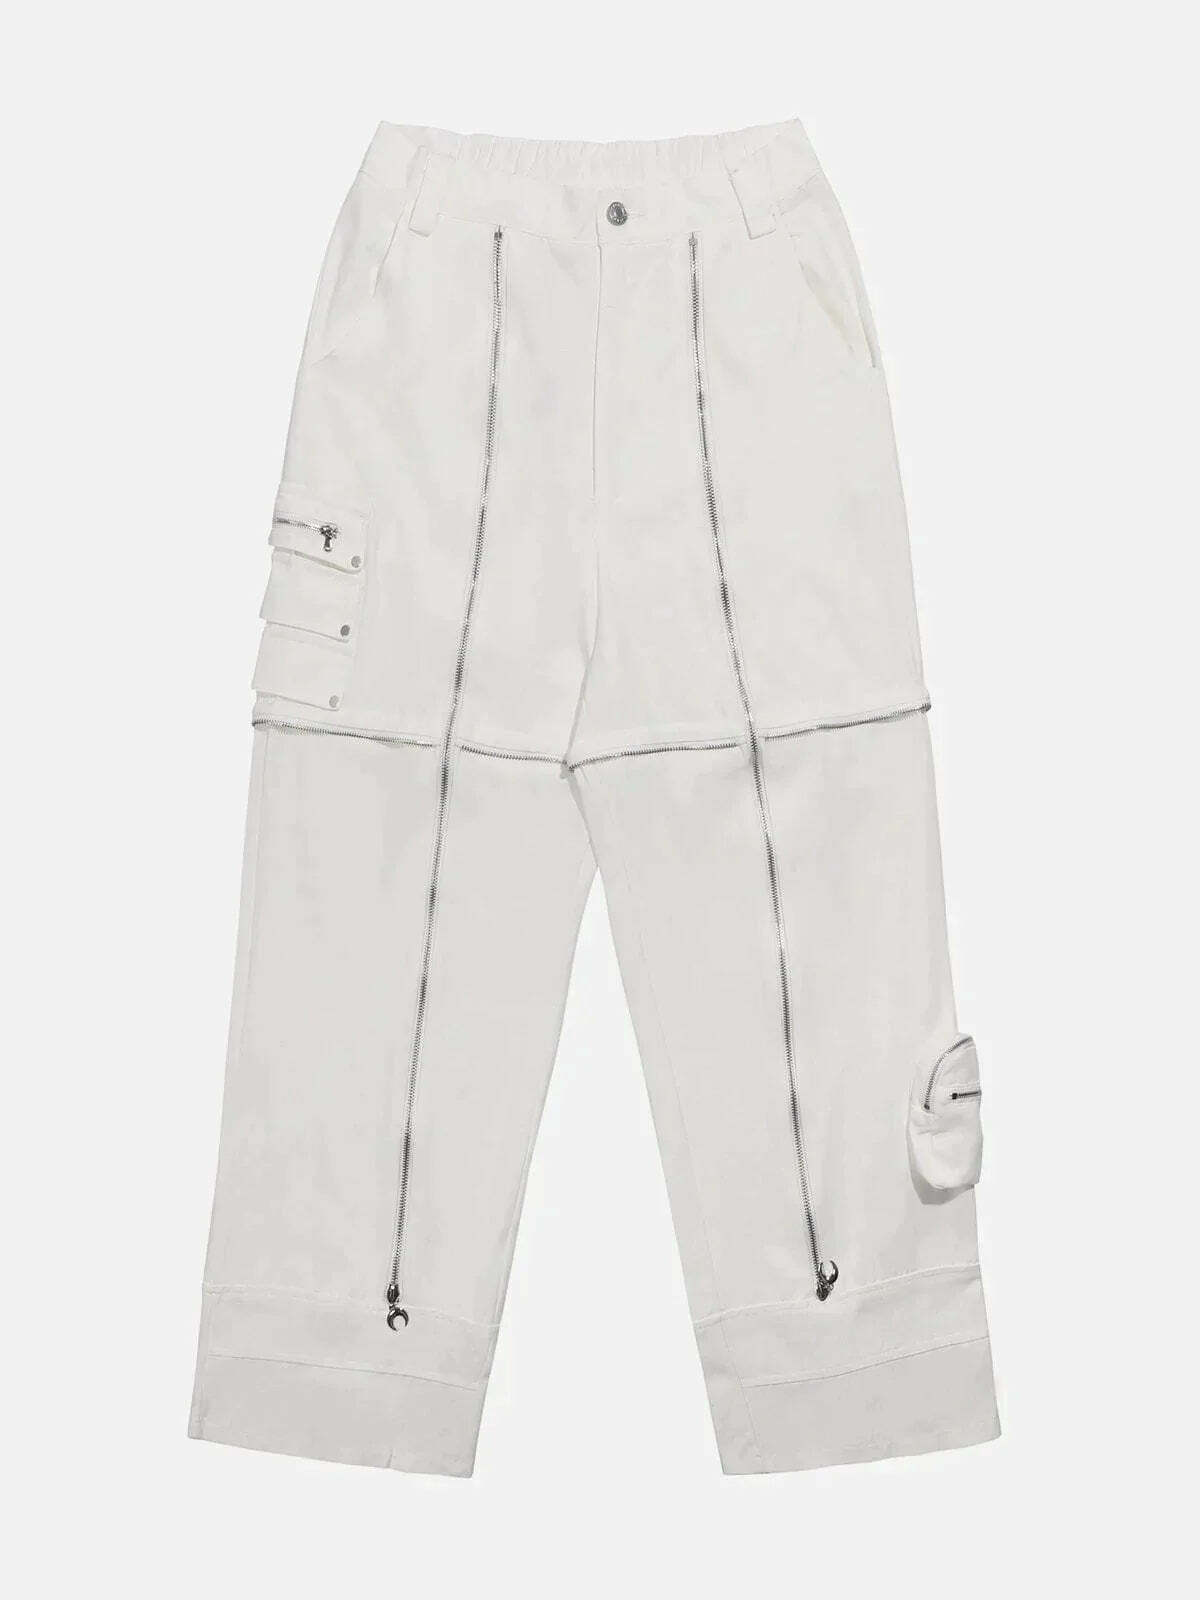 loose pants with zipper detail edgy & versatile streetwear 4042